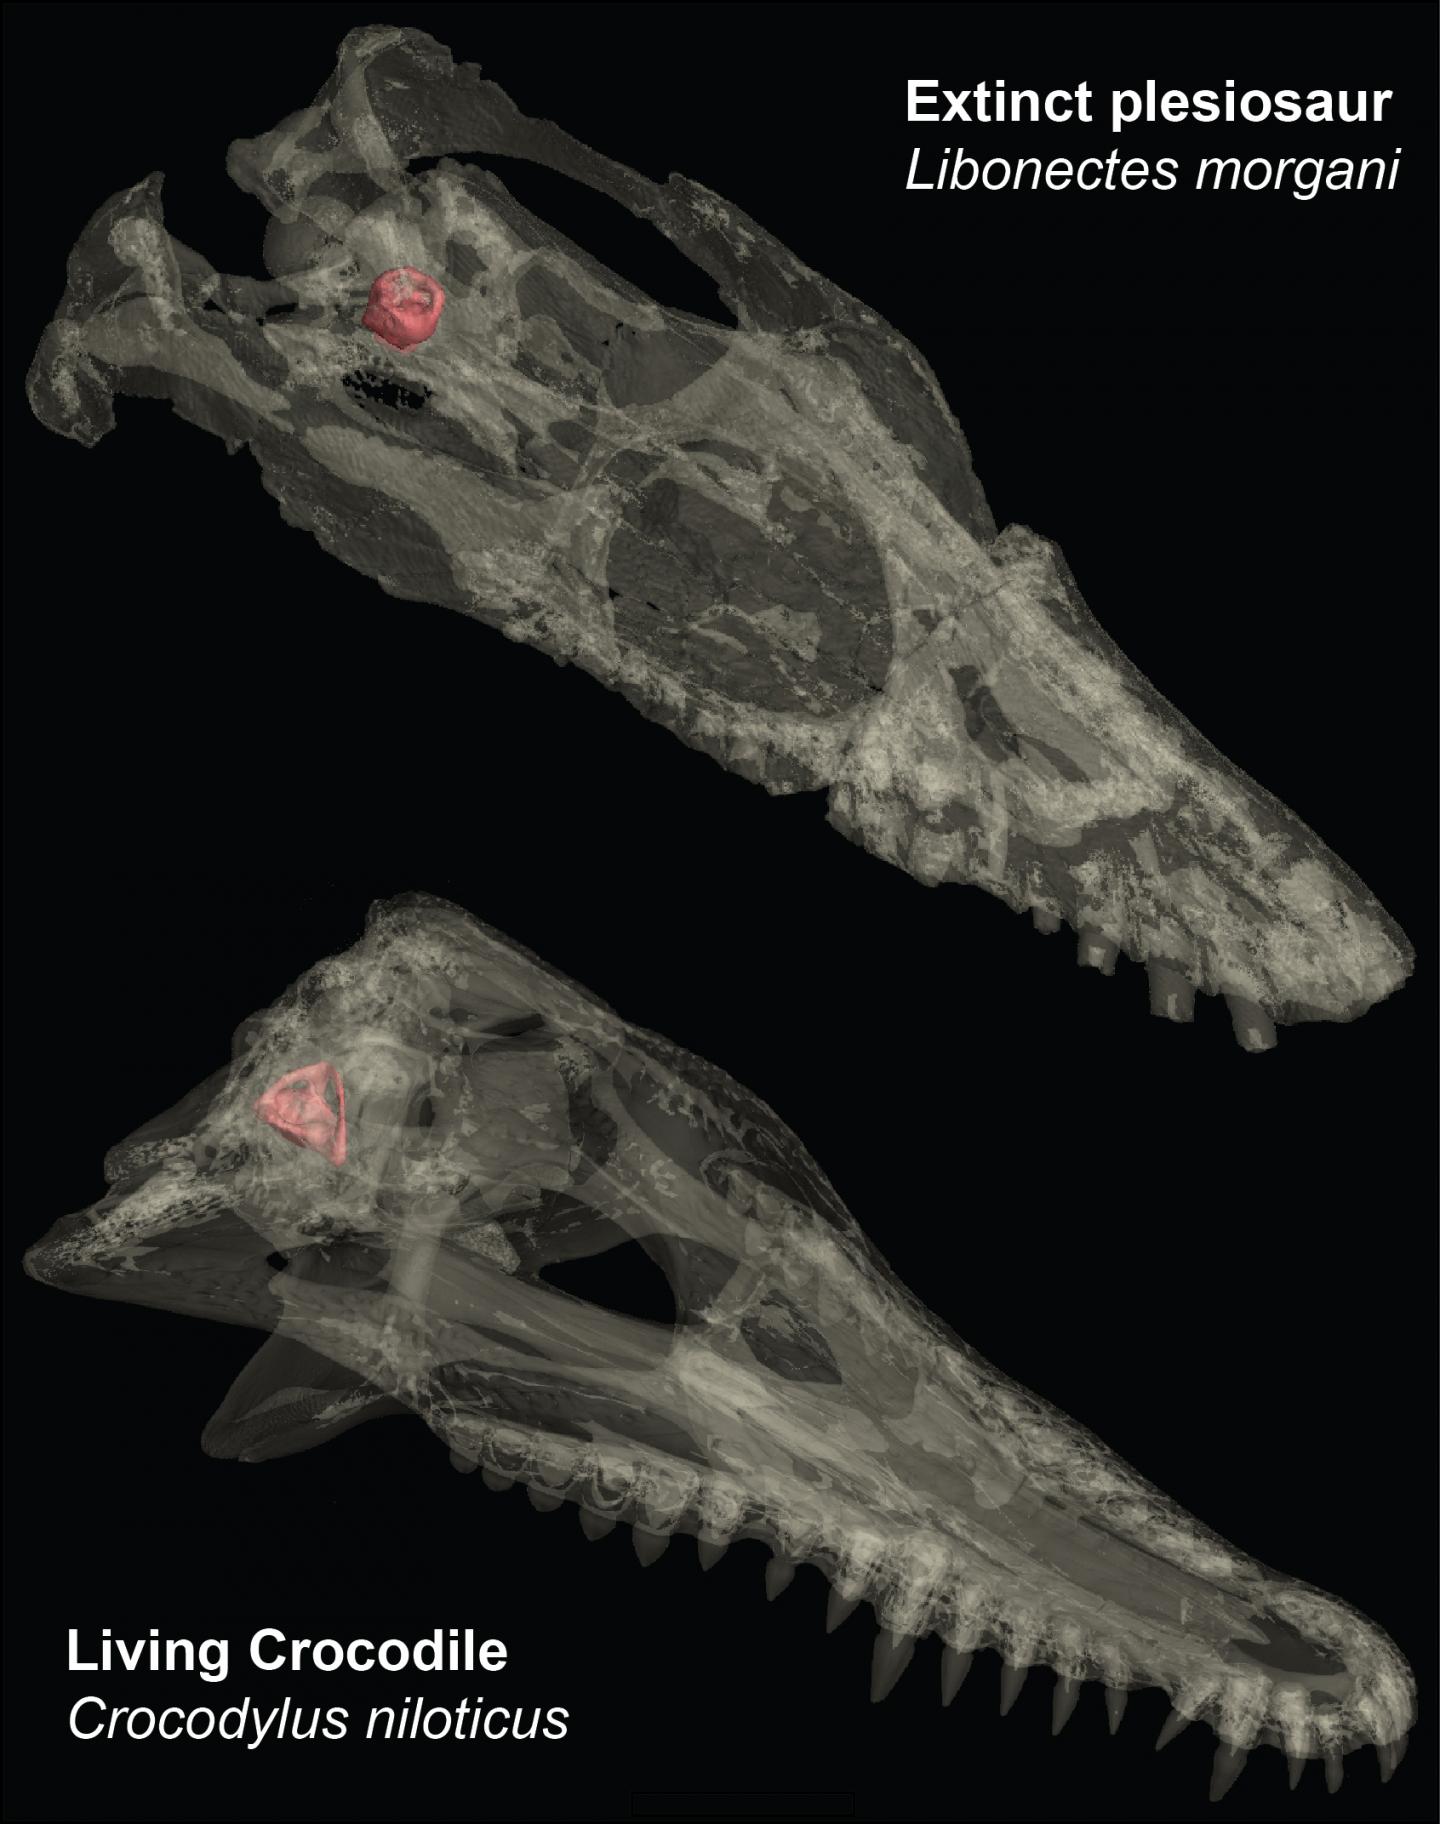 Transparent Skulls of Extinct Plesiosaur and Living Crocodile